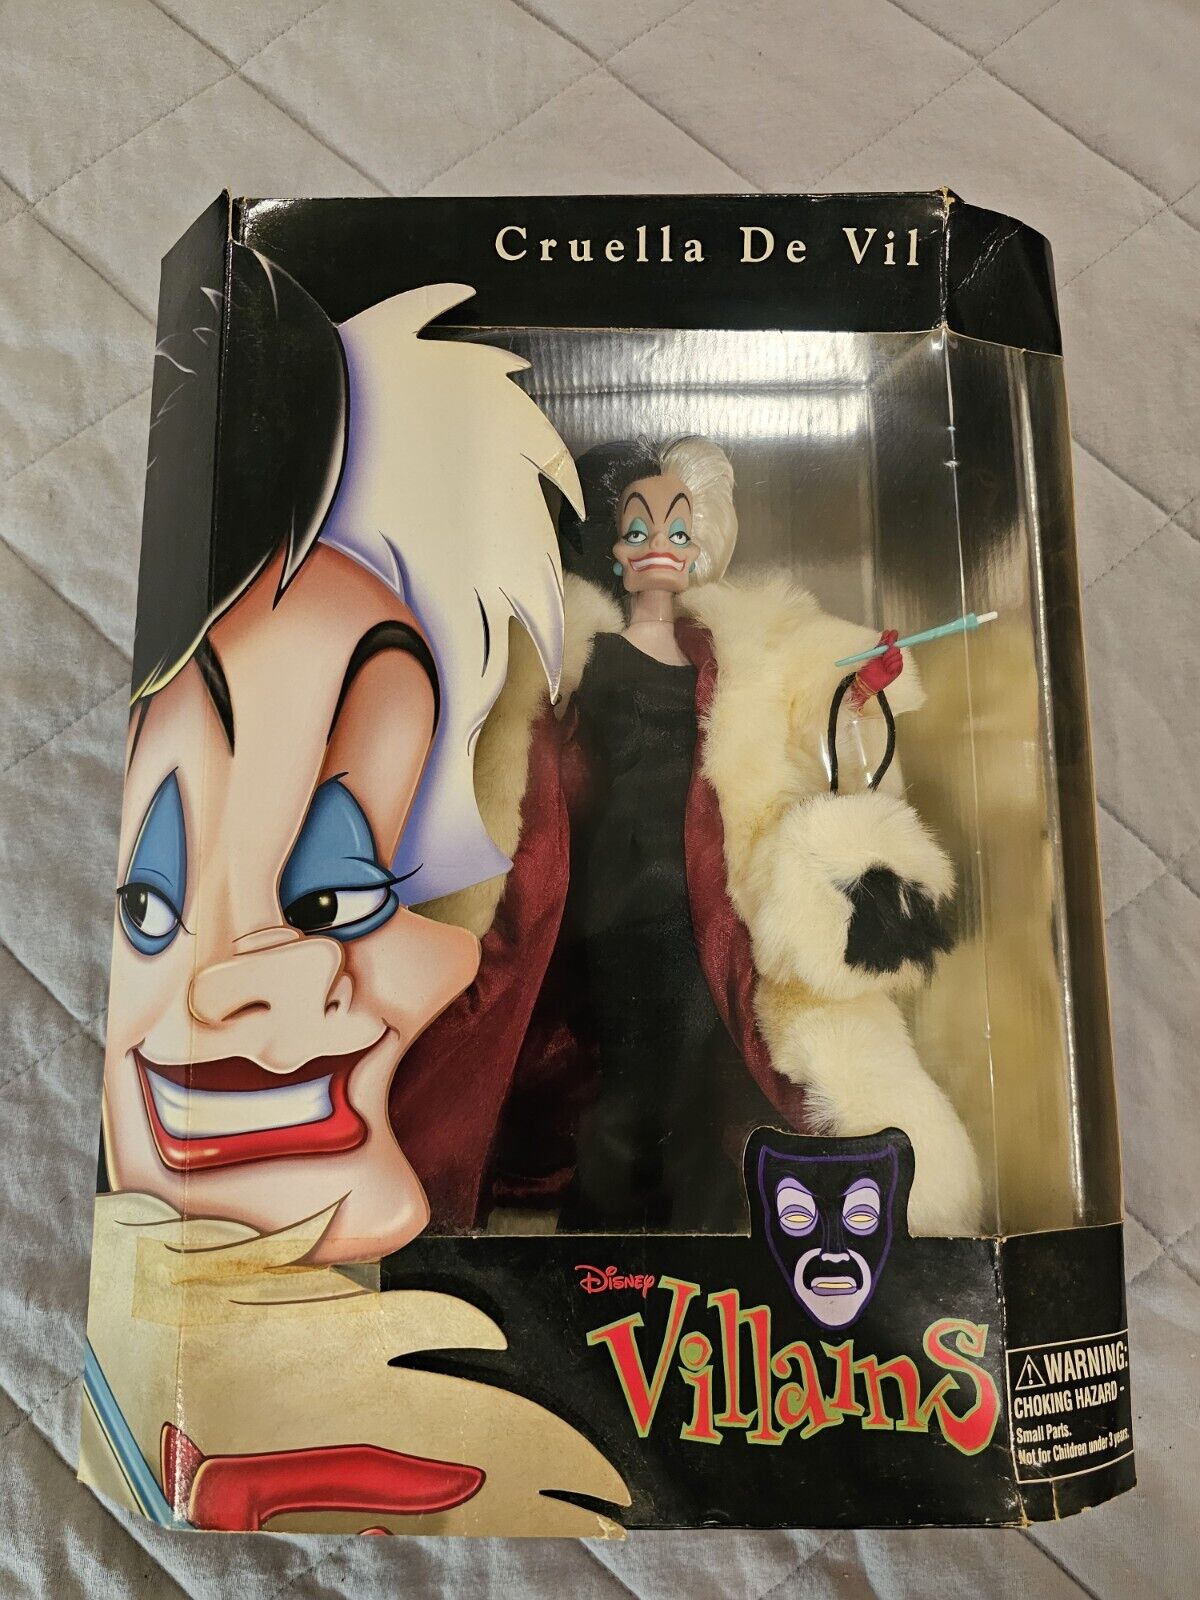 Disney Villains Cruella De Vil Doll  Dalmations Exclusive Limited Edition 